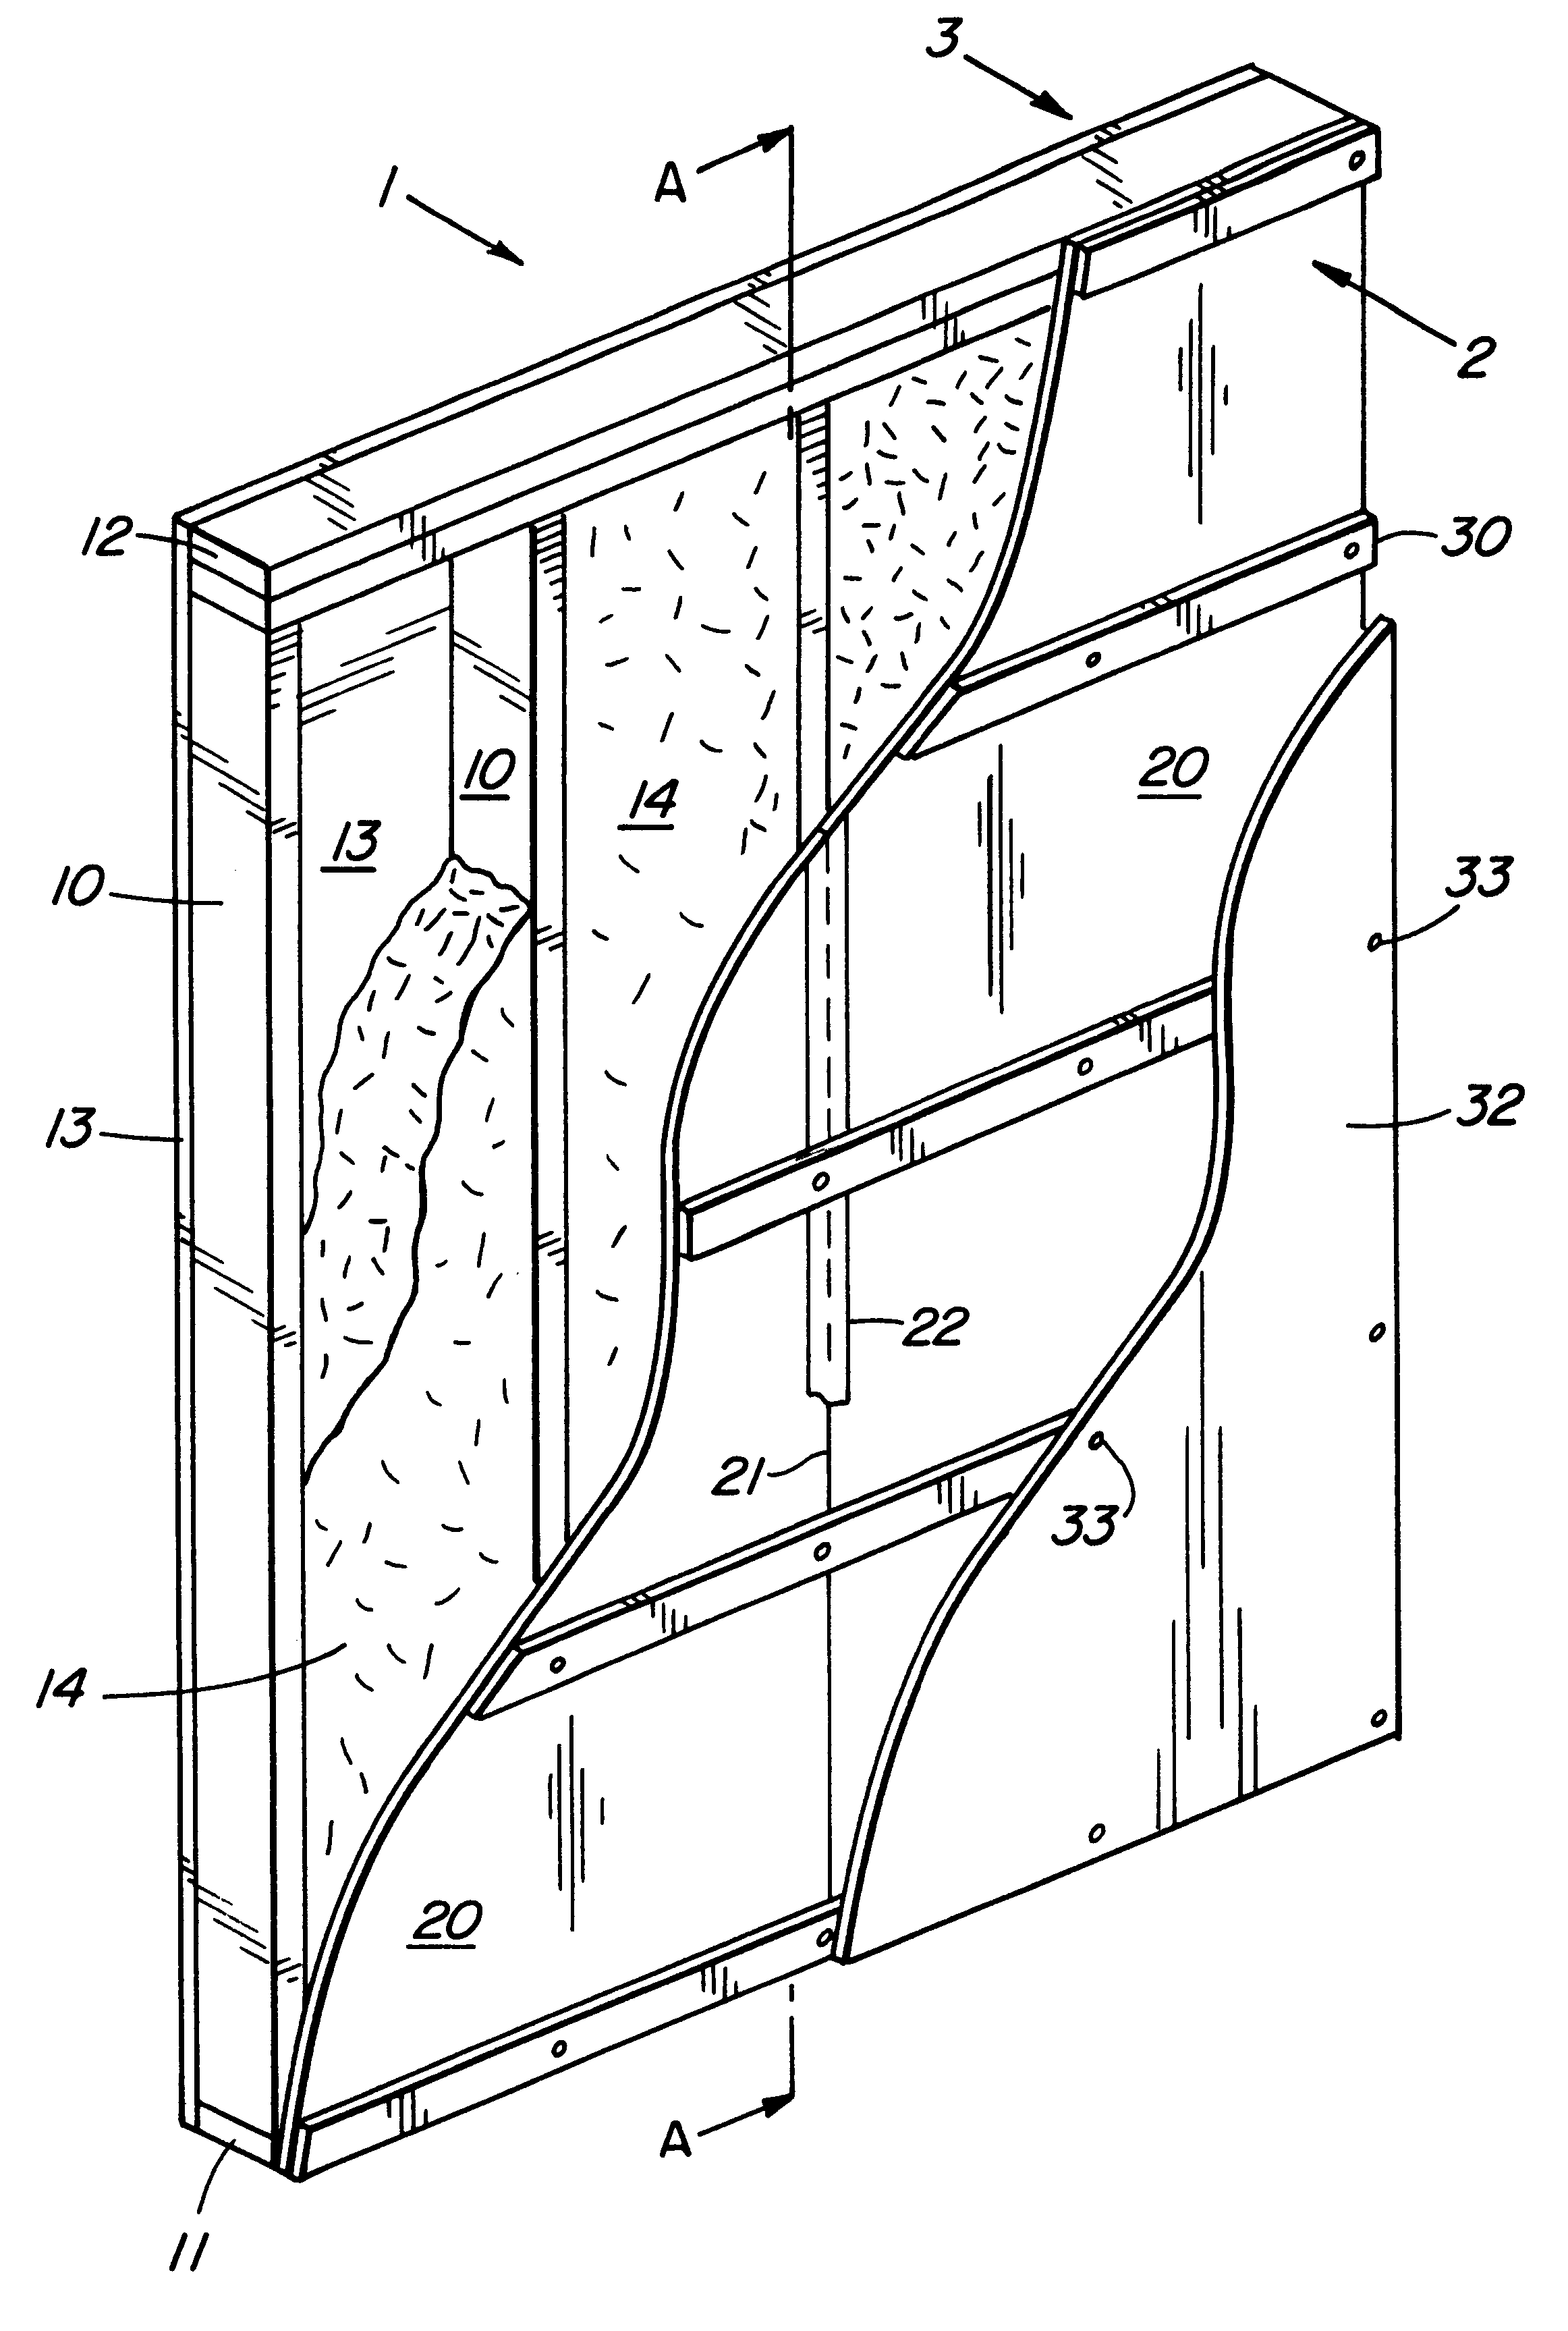 Composite vapor barrier panel